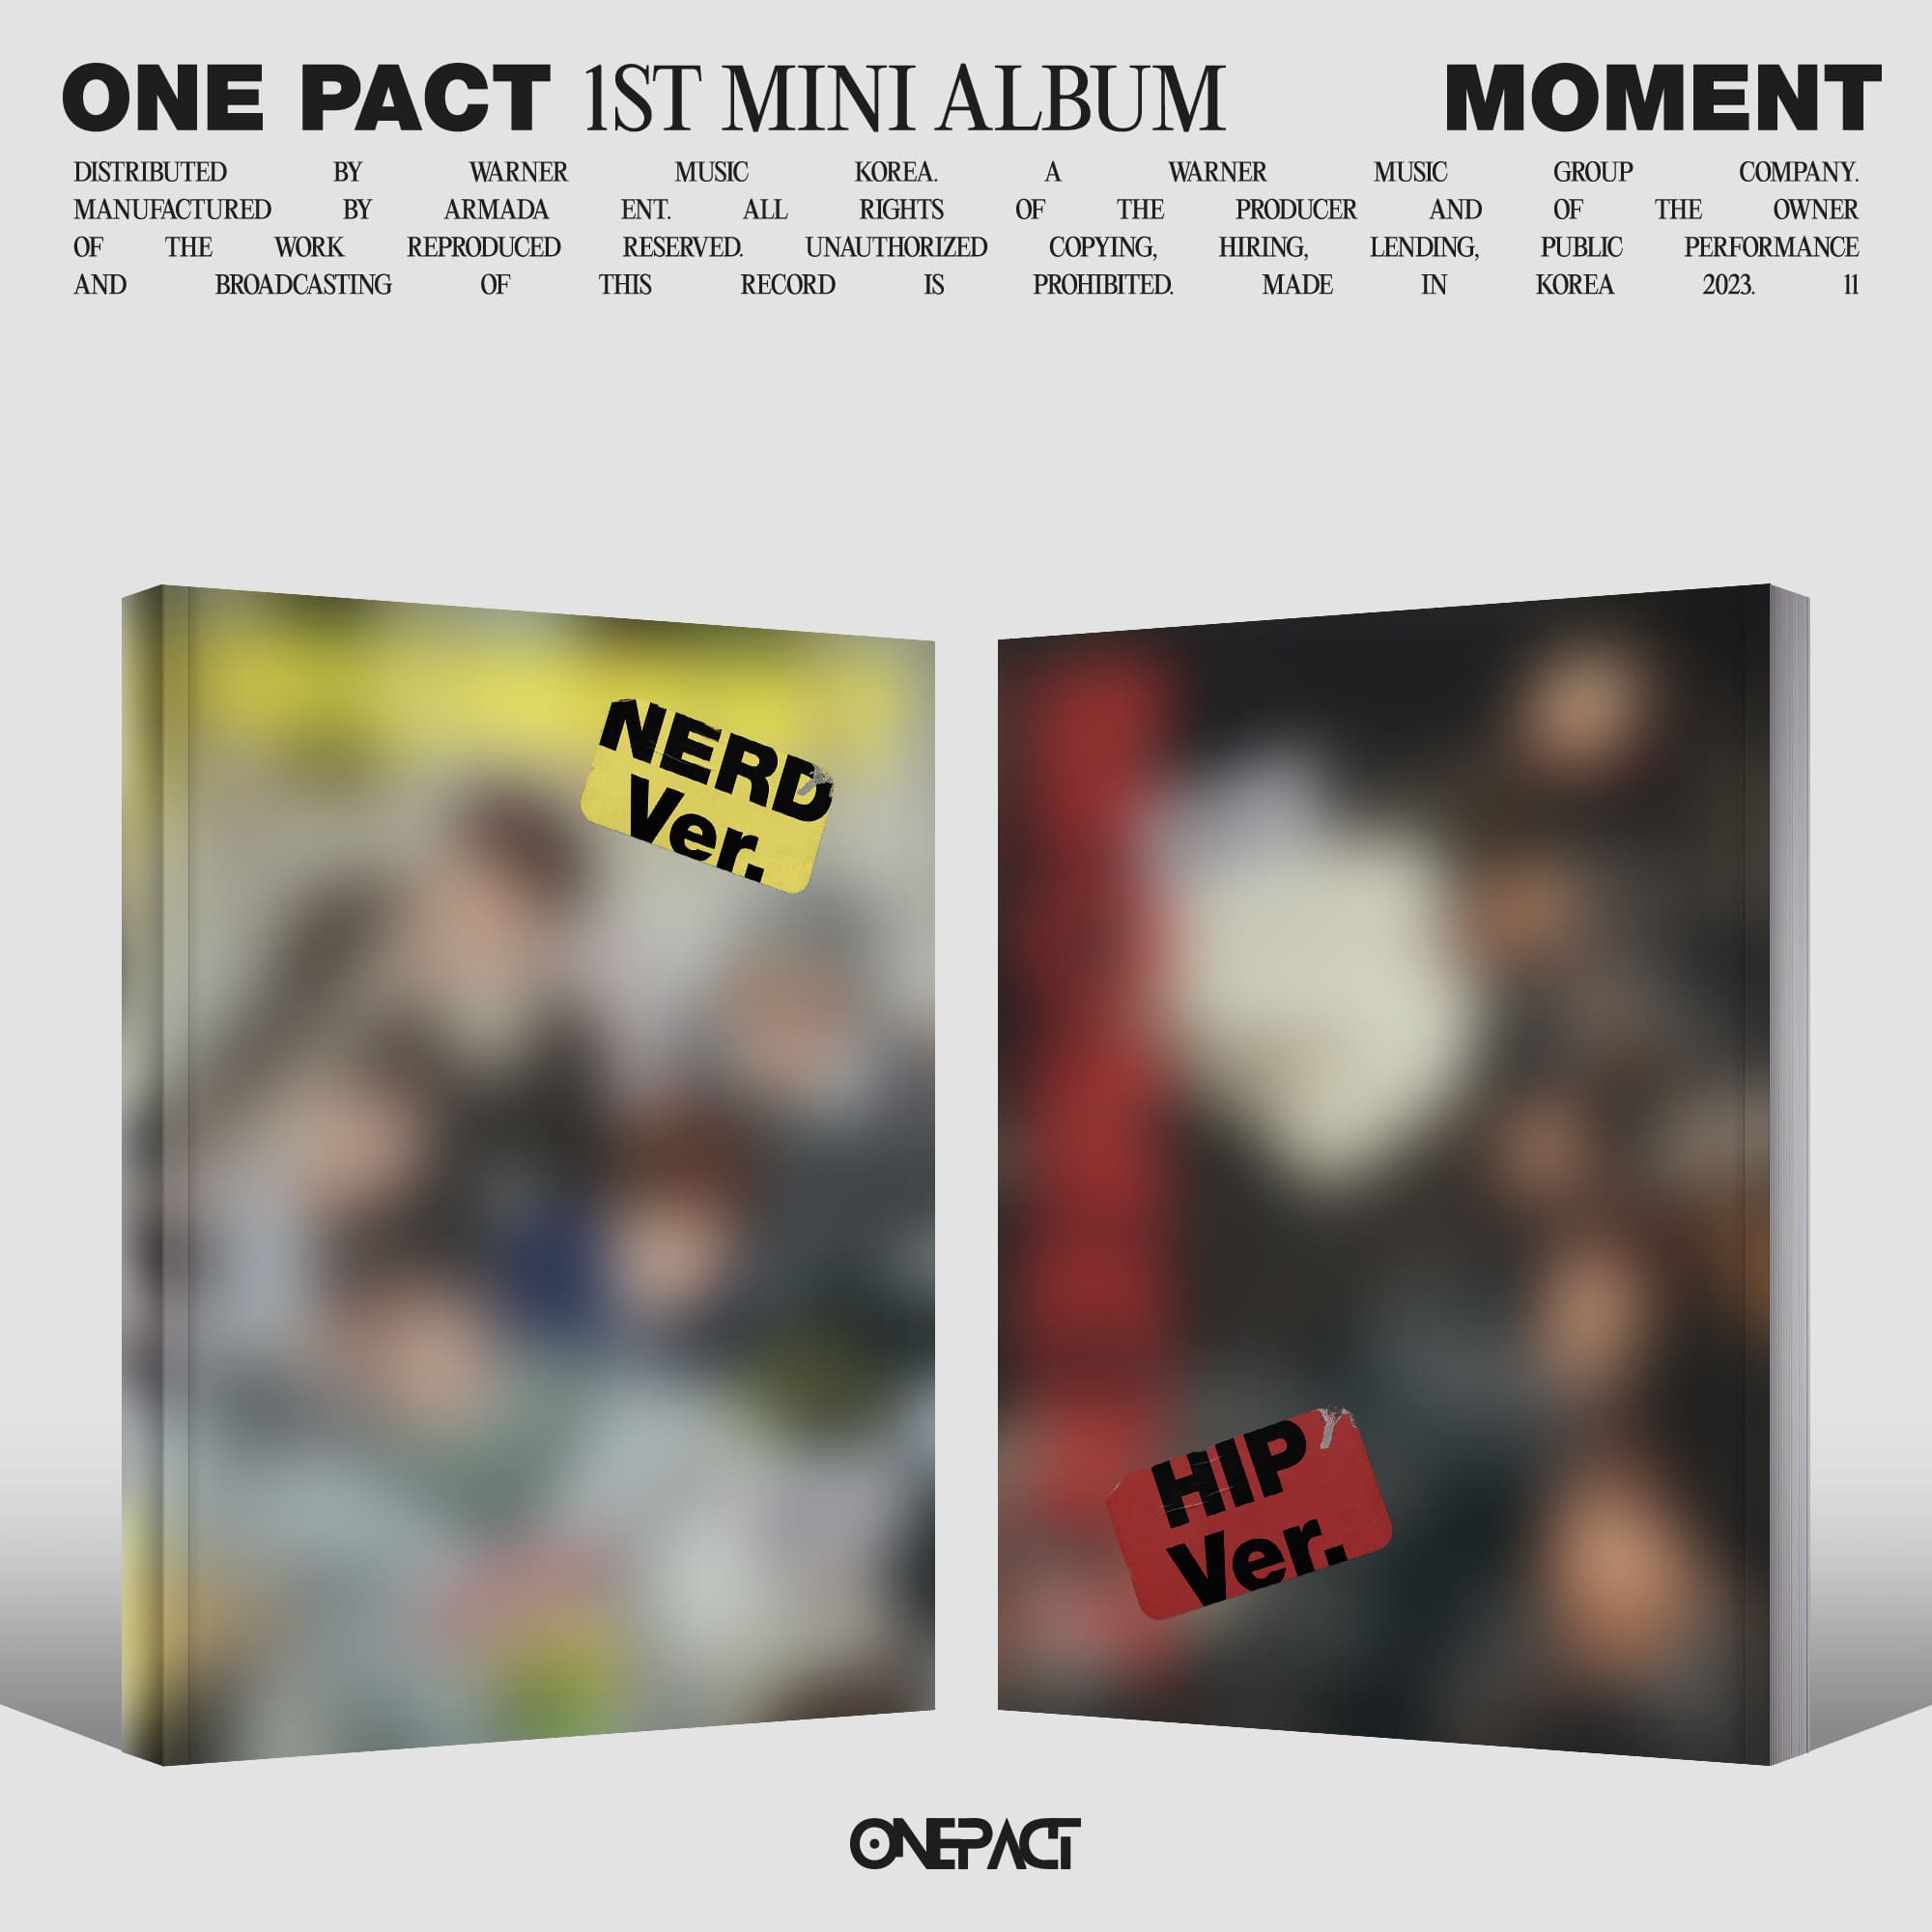 ONE PACT 1st Mini Album Moment